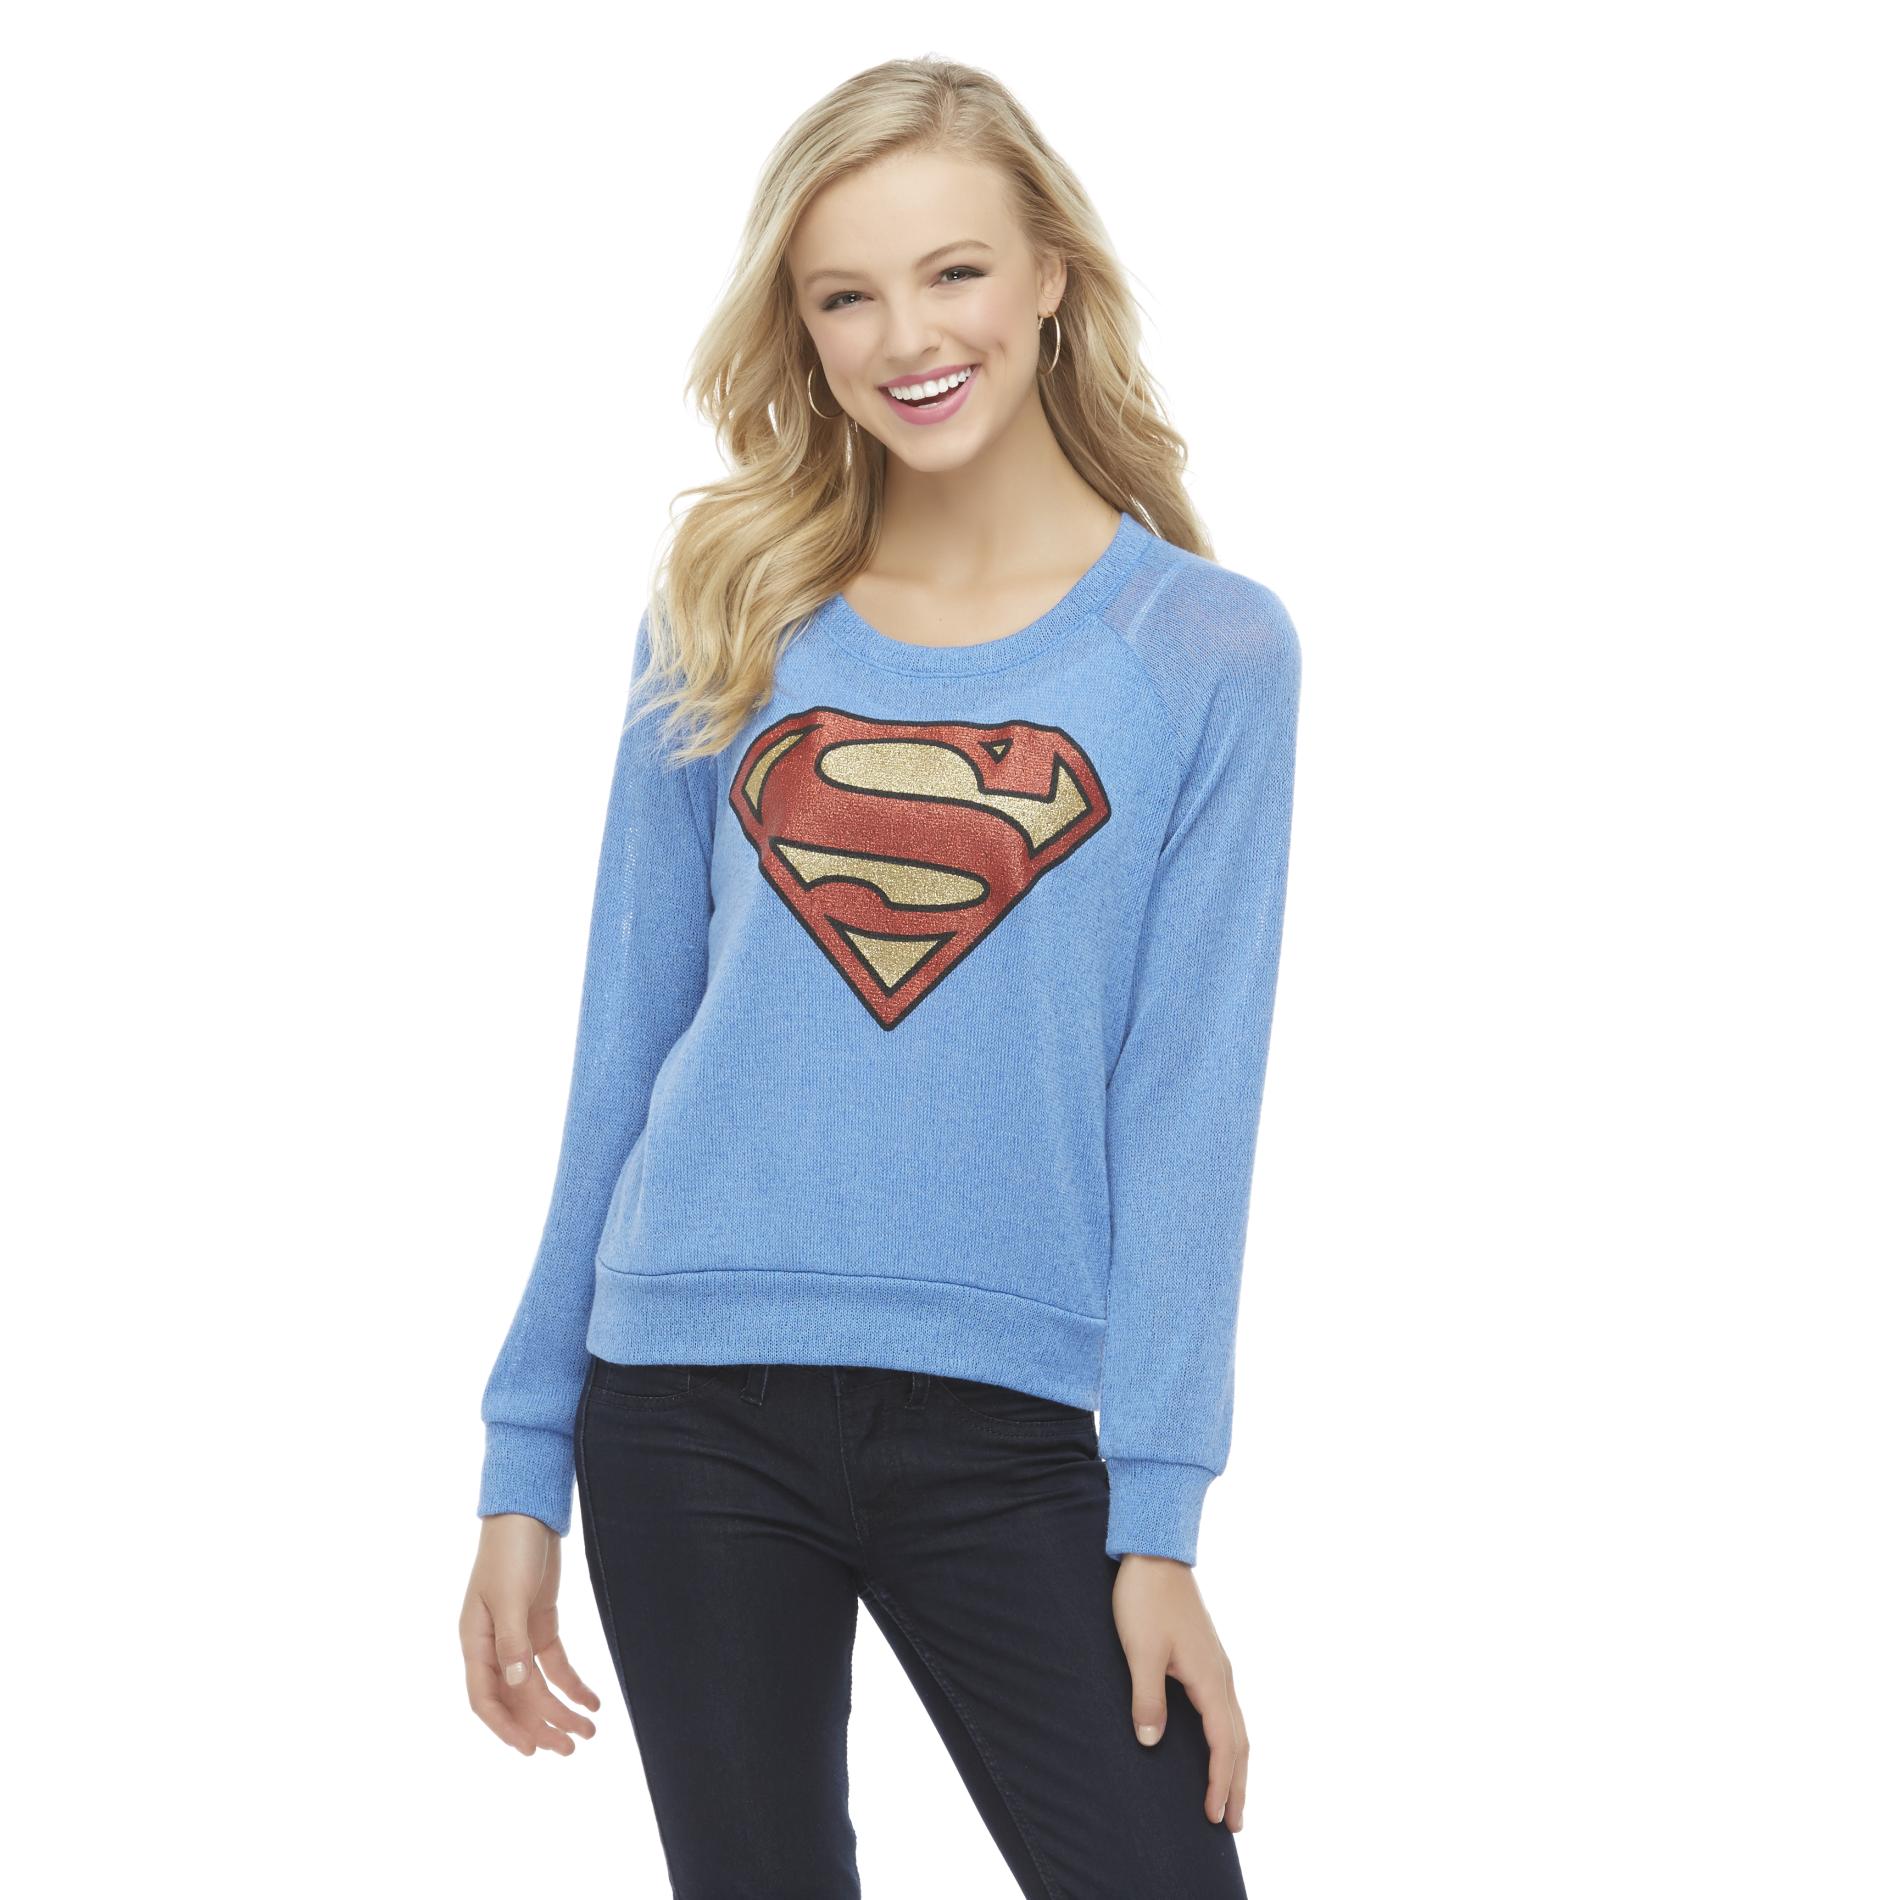 DC Comics Superman Junior's Novelty Sweater